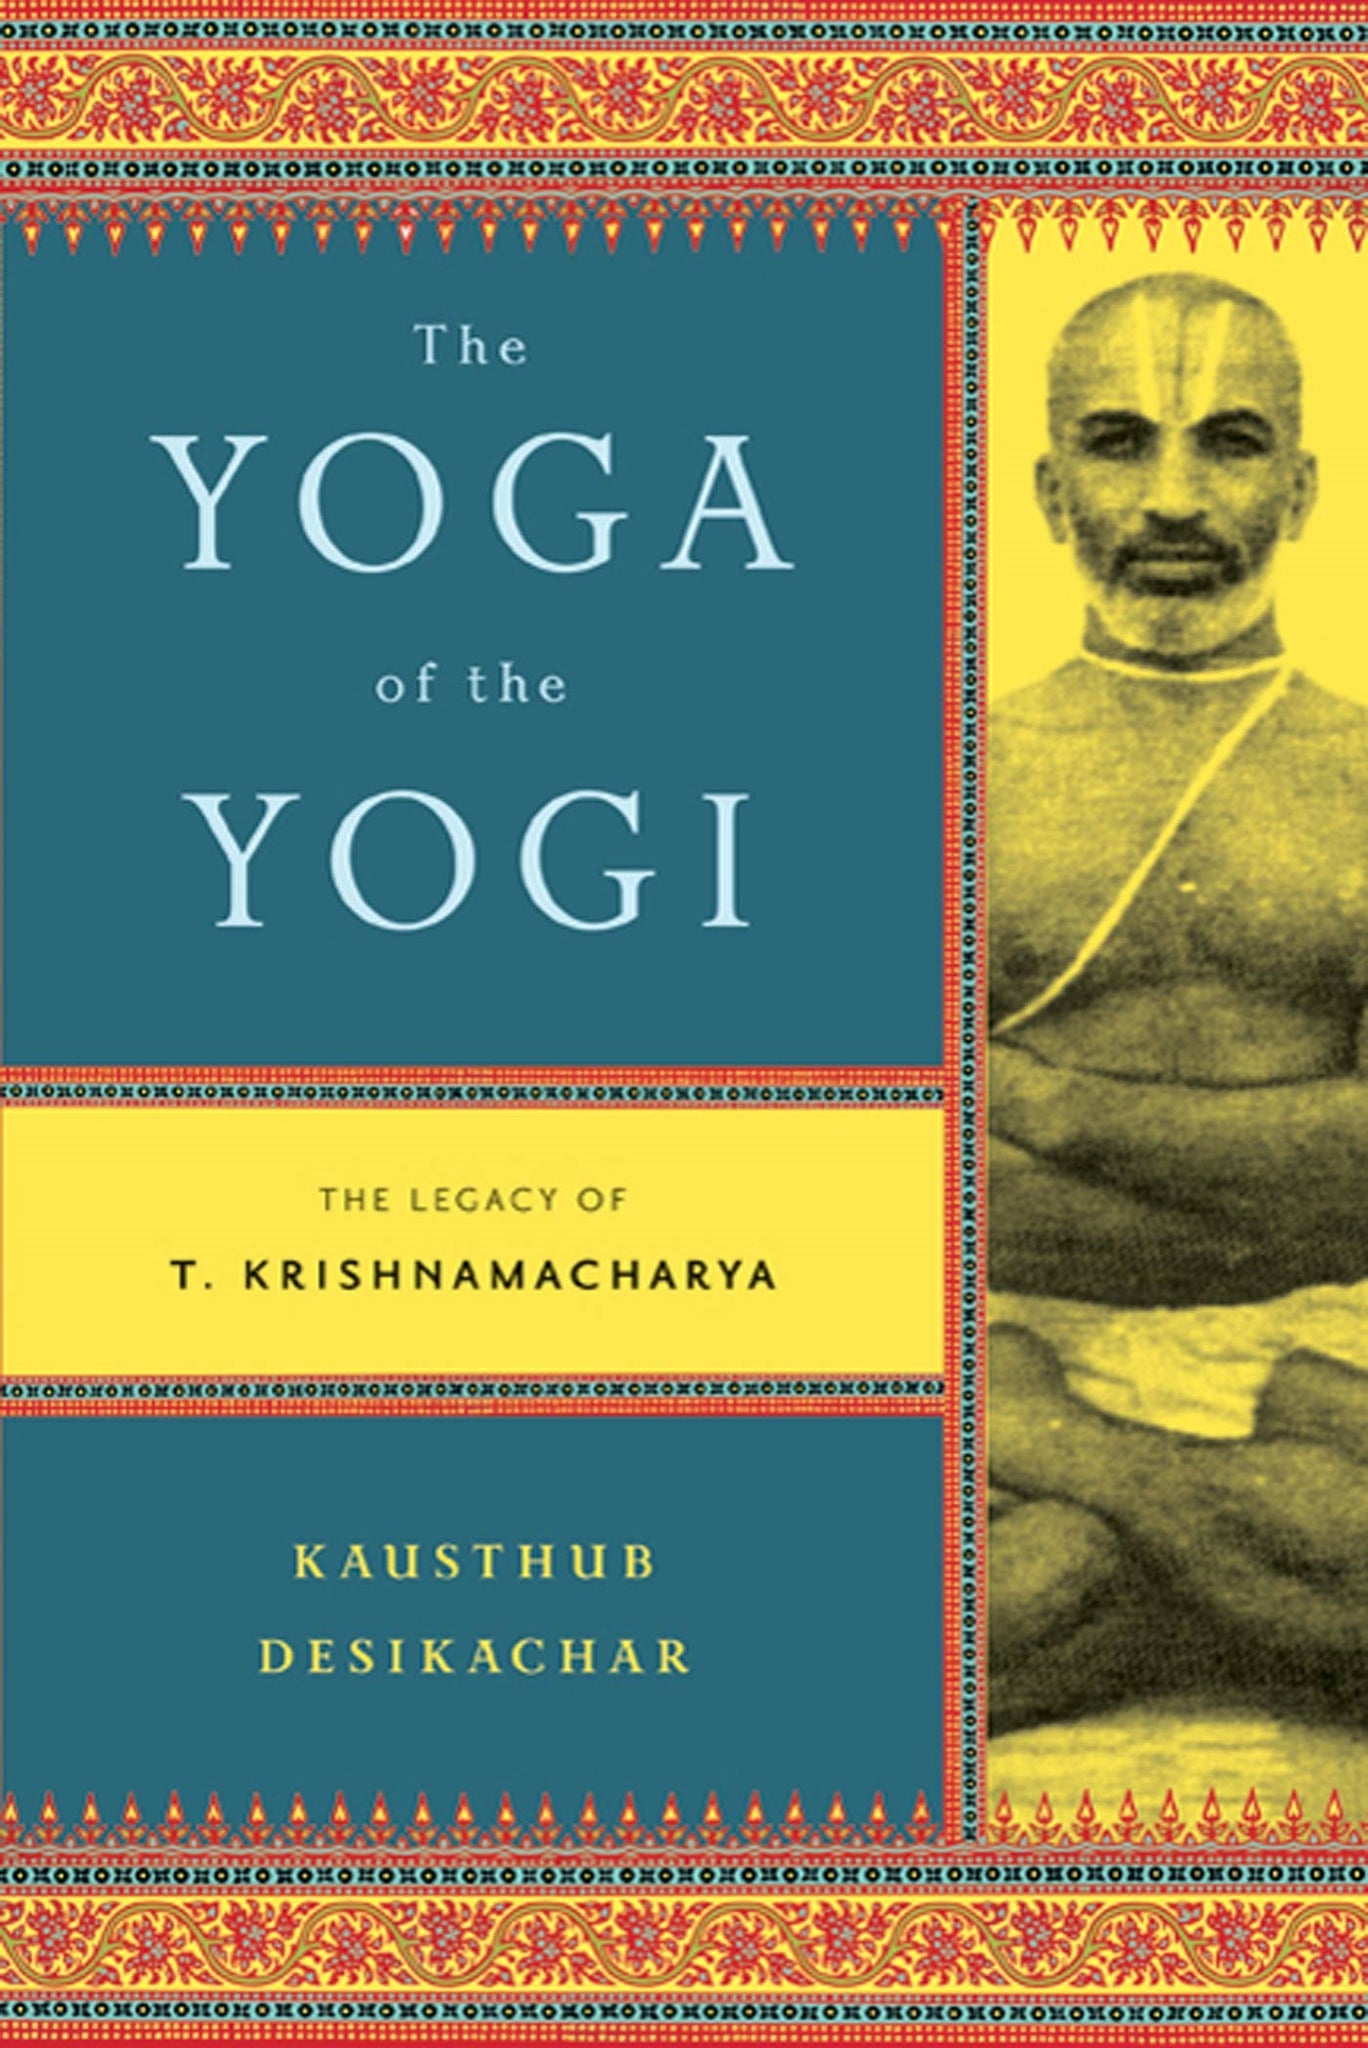 The Yoga of the Yogi : The Legacy of T. Krishnamacharya